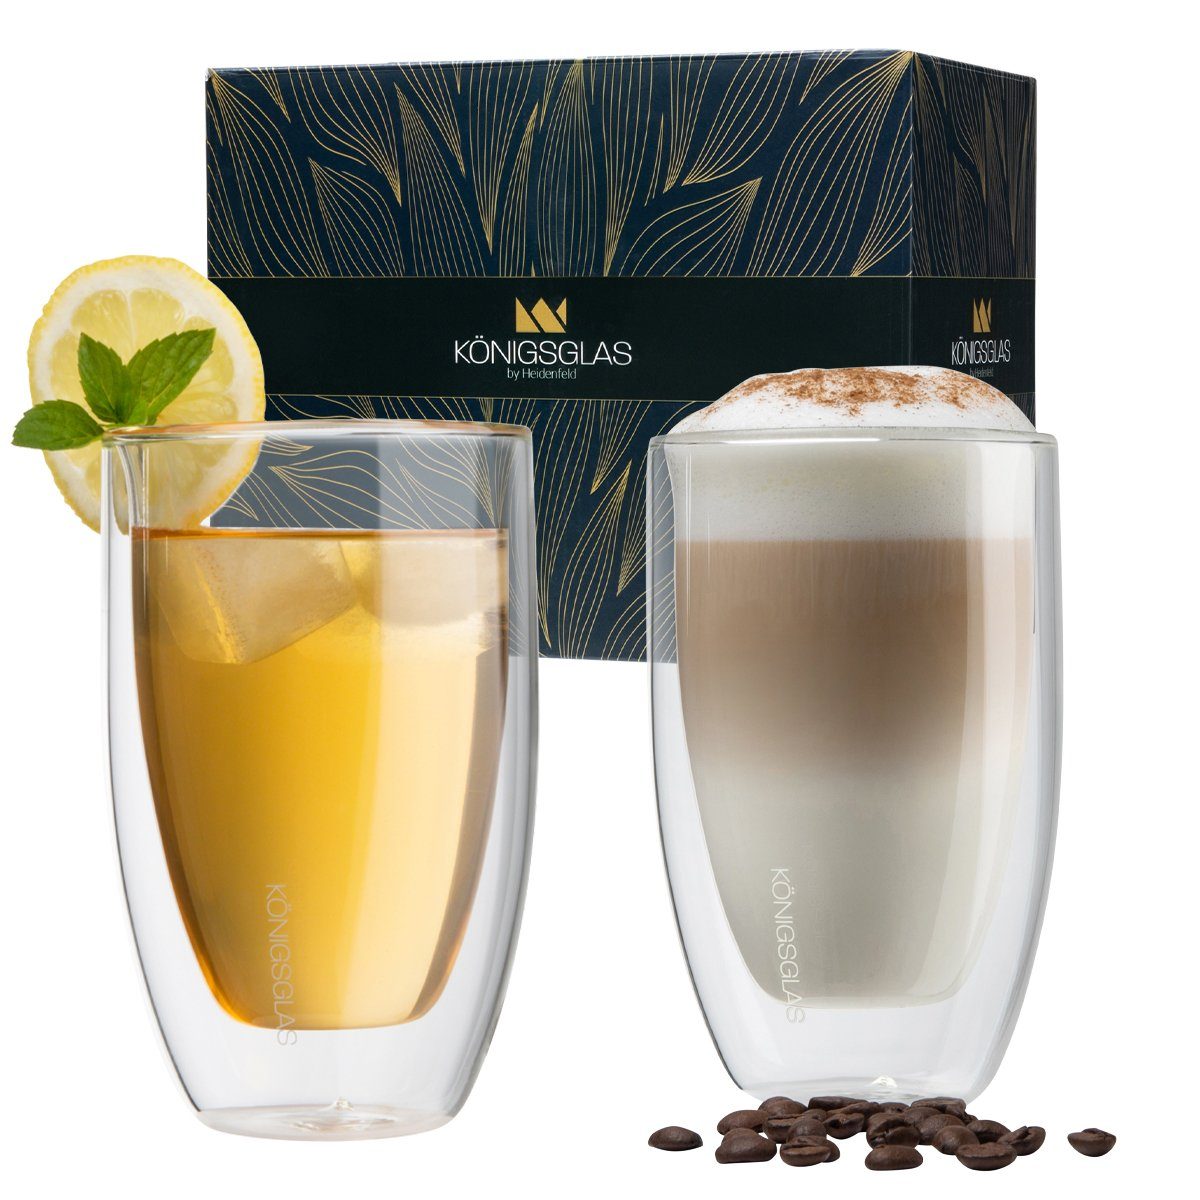 Königsglas Latte-Macchiato-Glas Latte Macchiato Glas 300 ml Cappuccino Скло-Set doppelwandig, Kaffeetasse, 2/4er Glas Set Trinkglas Thermoglas Kaffee Teeglas Kaffeegläser Tasse